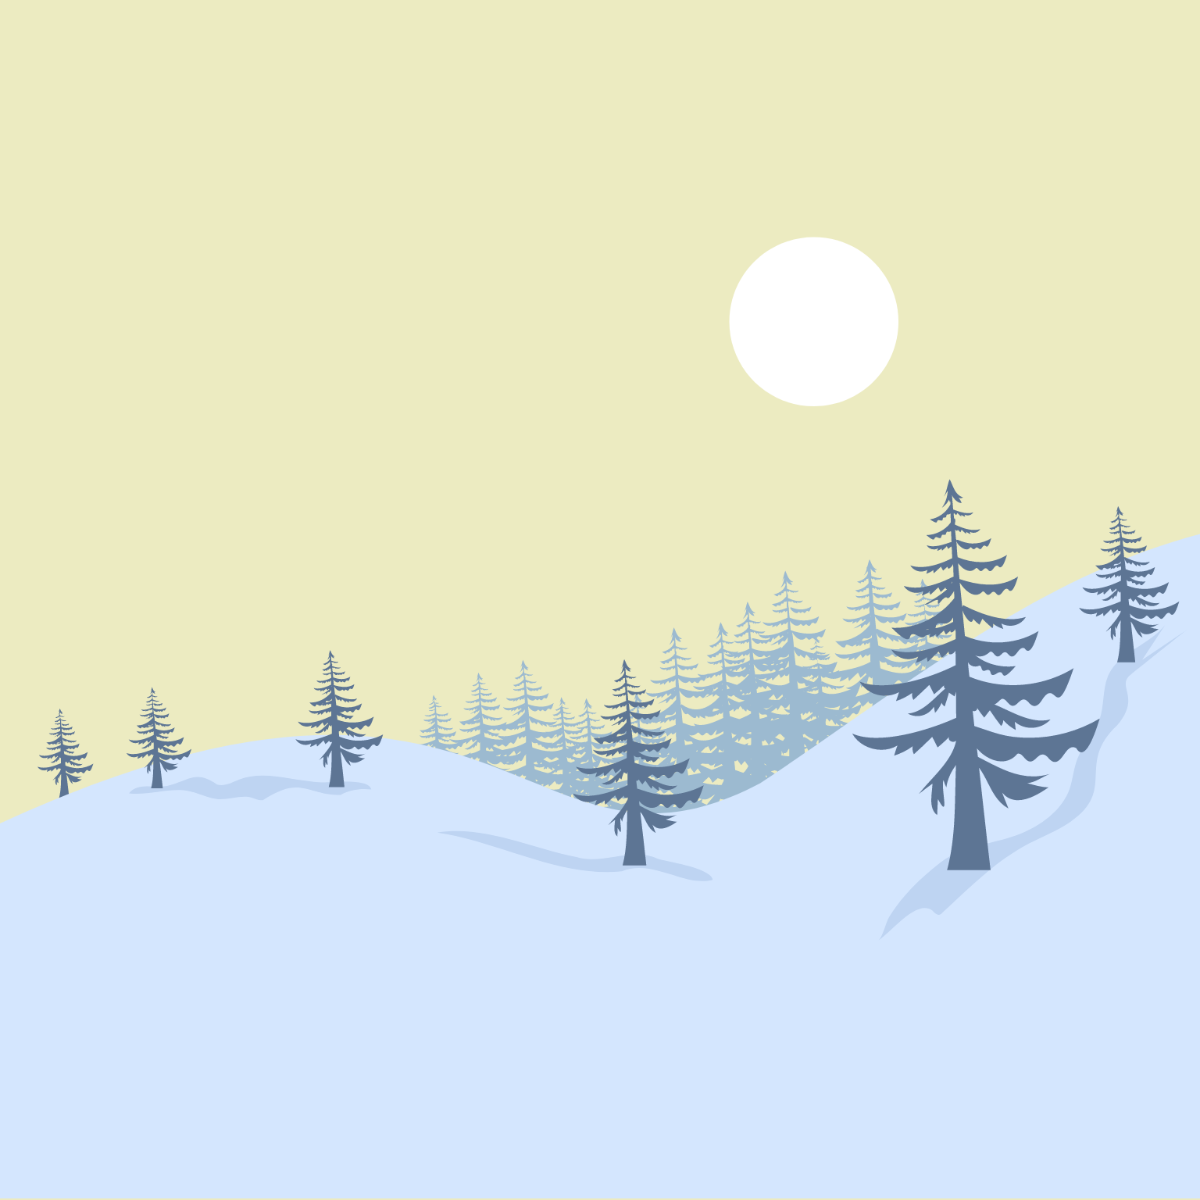 Winter Solstice Illustration